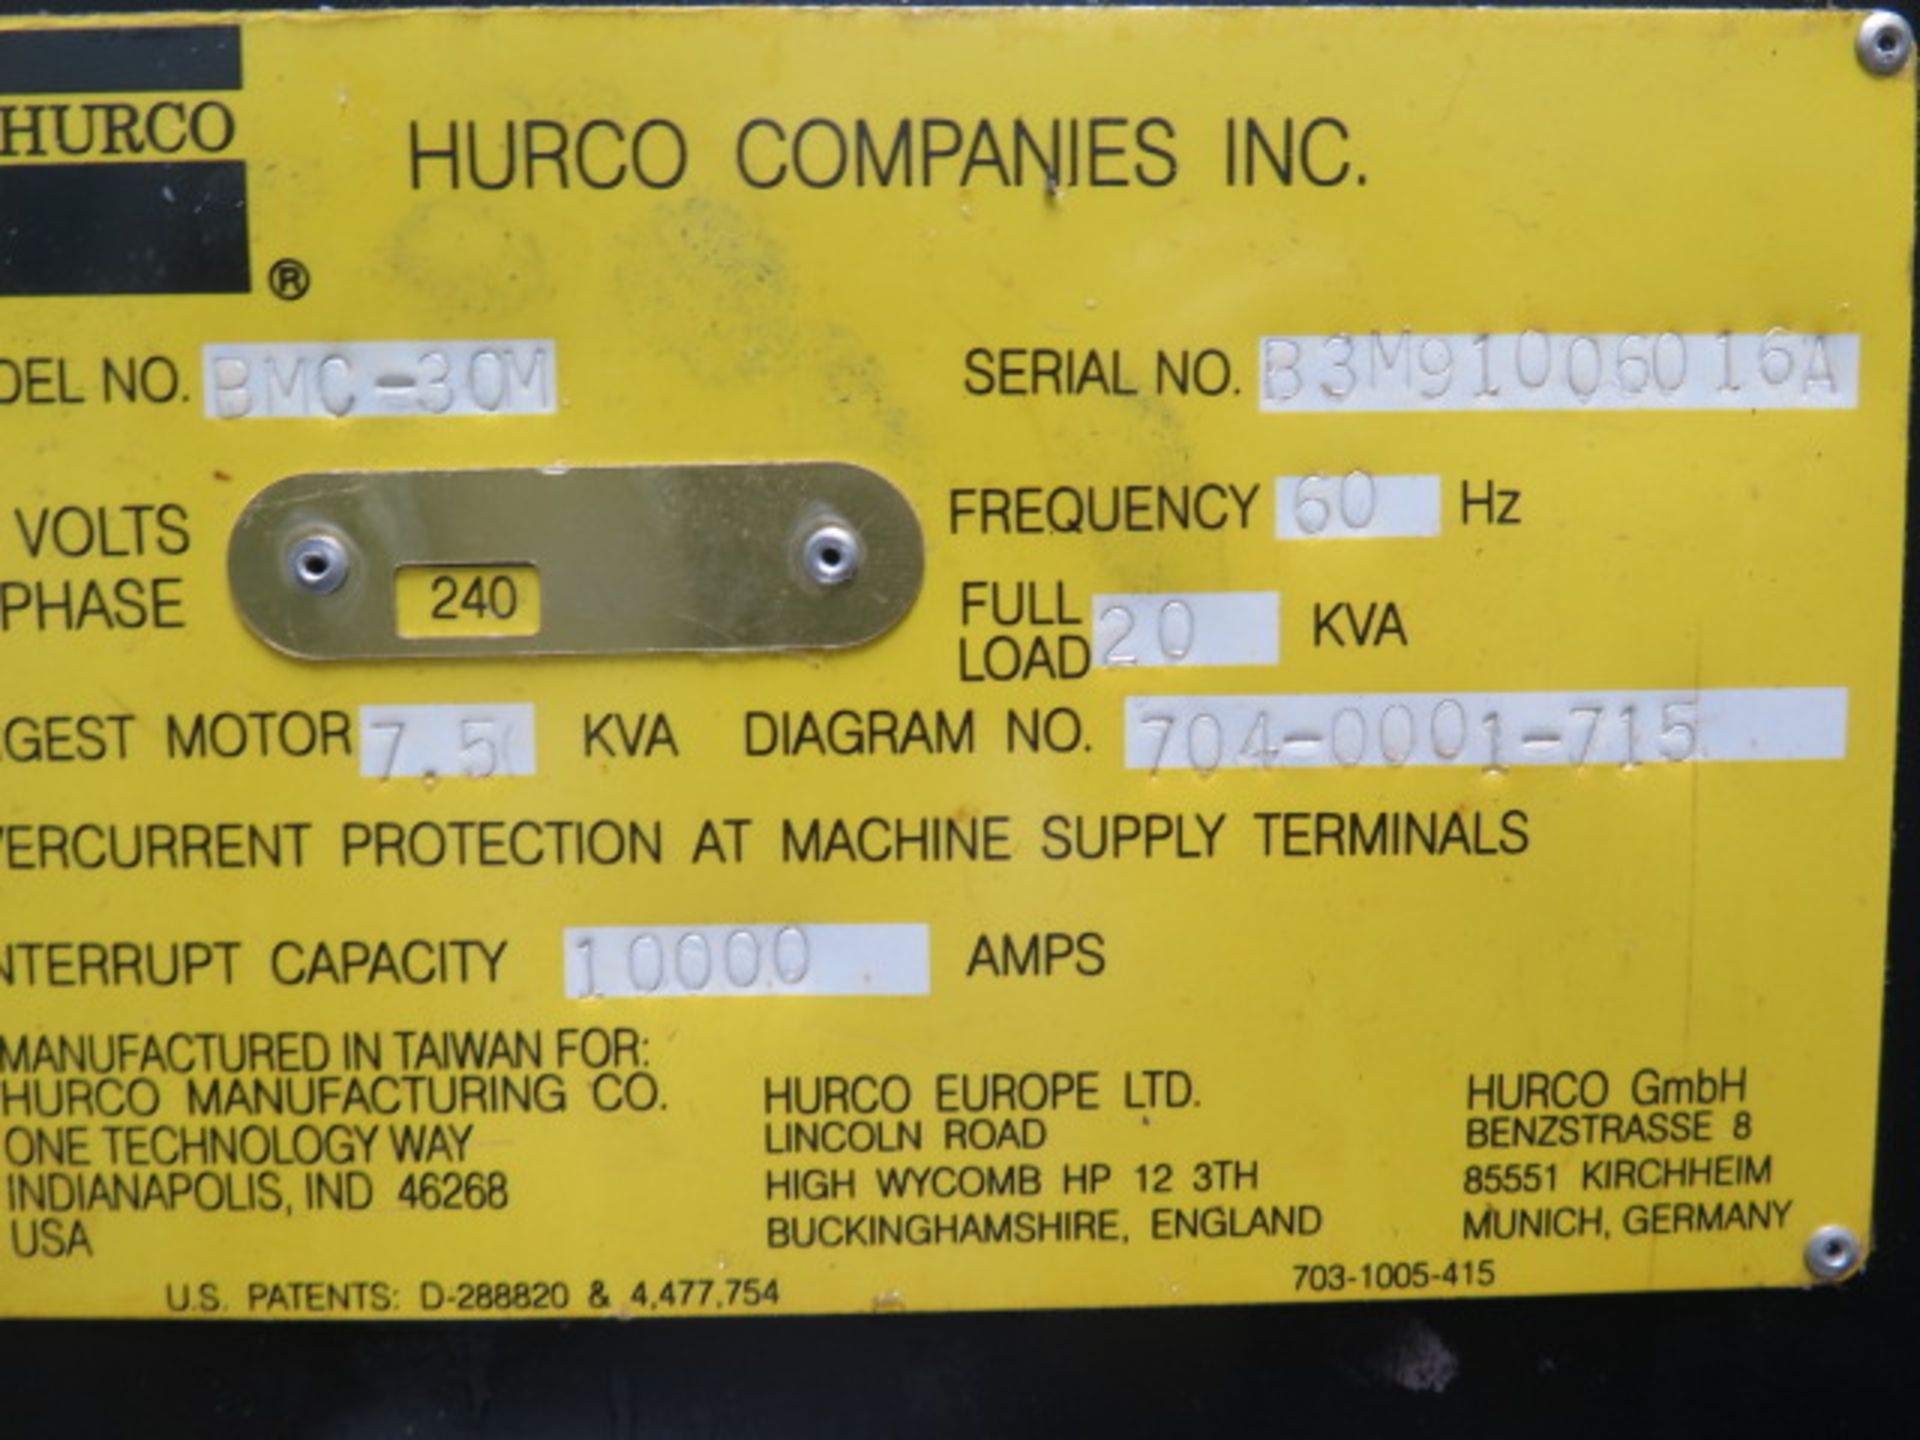 Hurco BMC30/M CNC VMC, s/n B3M91006016A (MACHINE NEEDS REPAIR) w/ Ultimax-3 CNC Controls Sold AS IS - Image 14 of 15